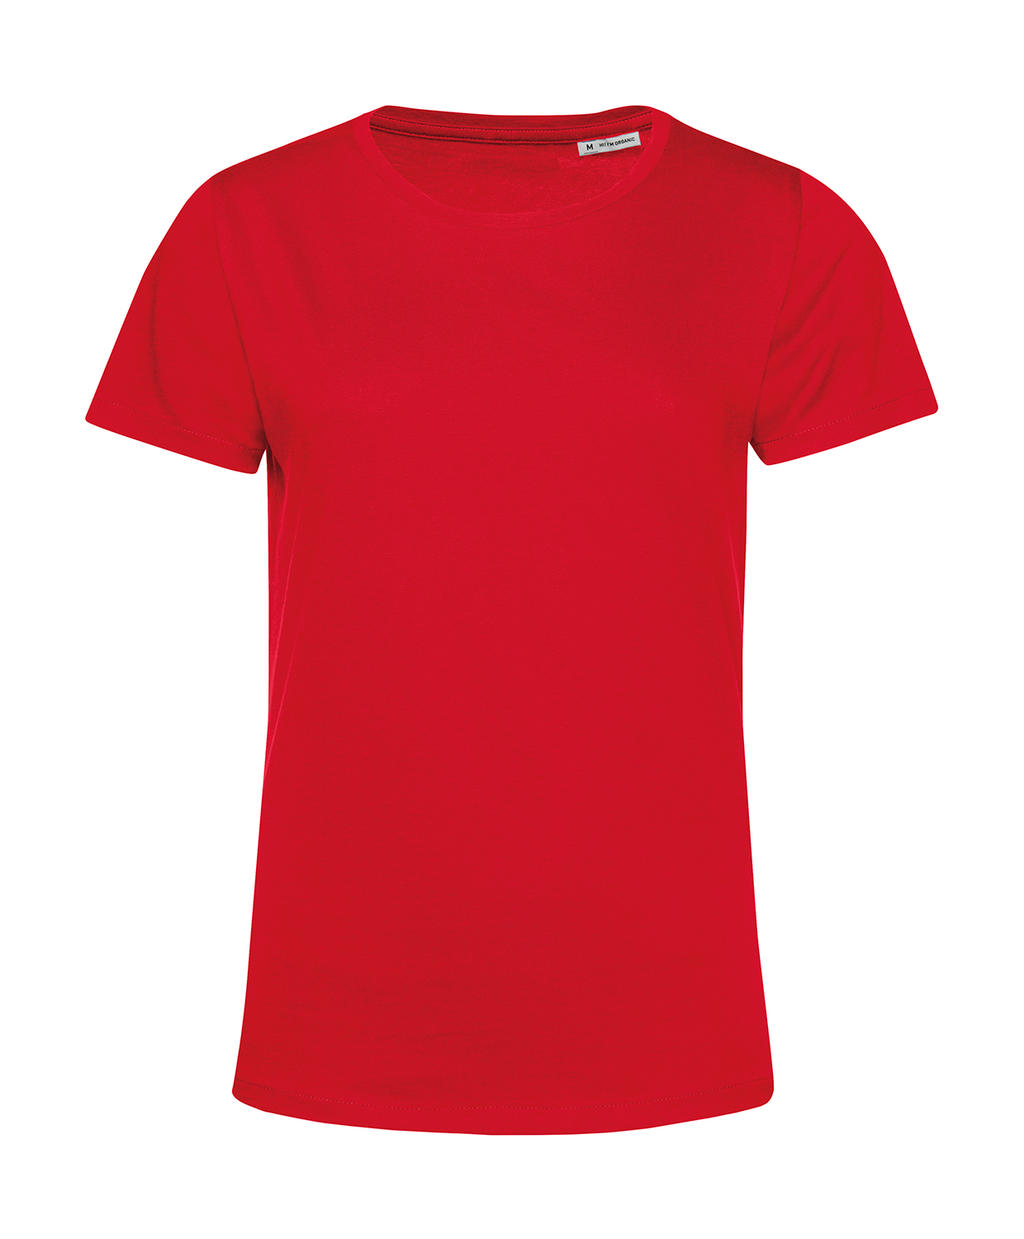 Tričko dámské BC Organic Inspire E150 - červené, XS